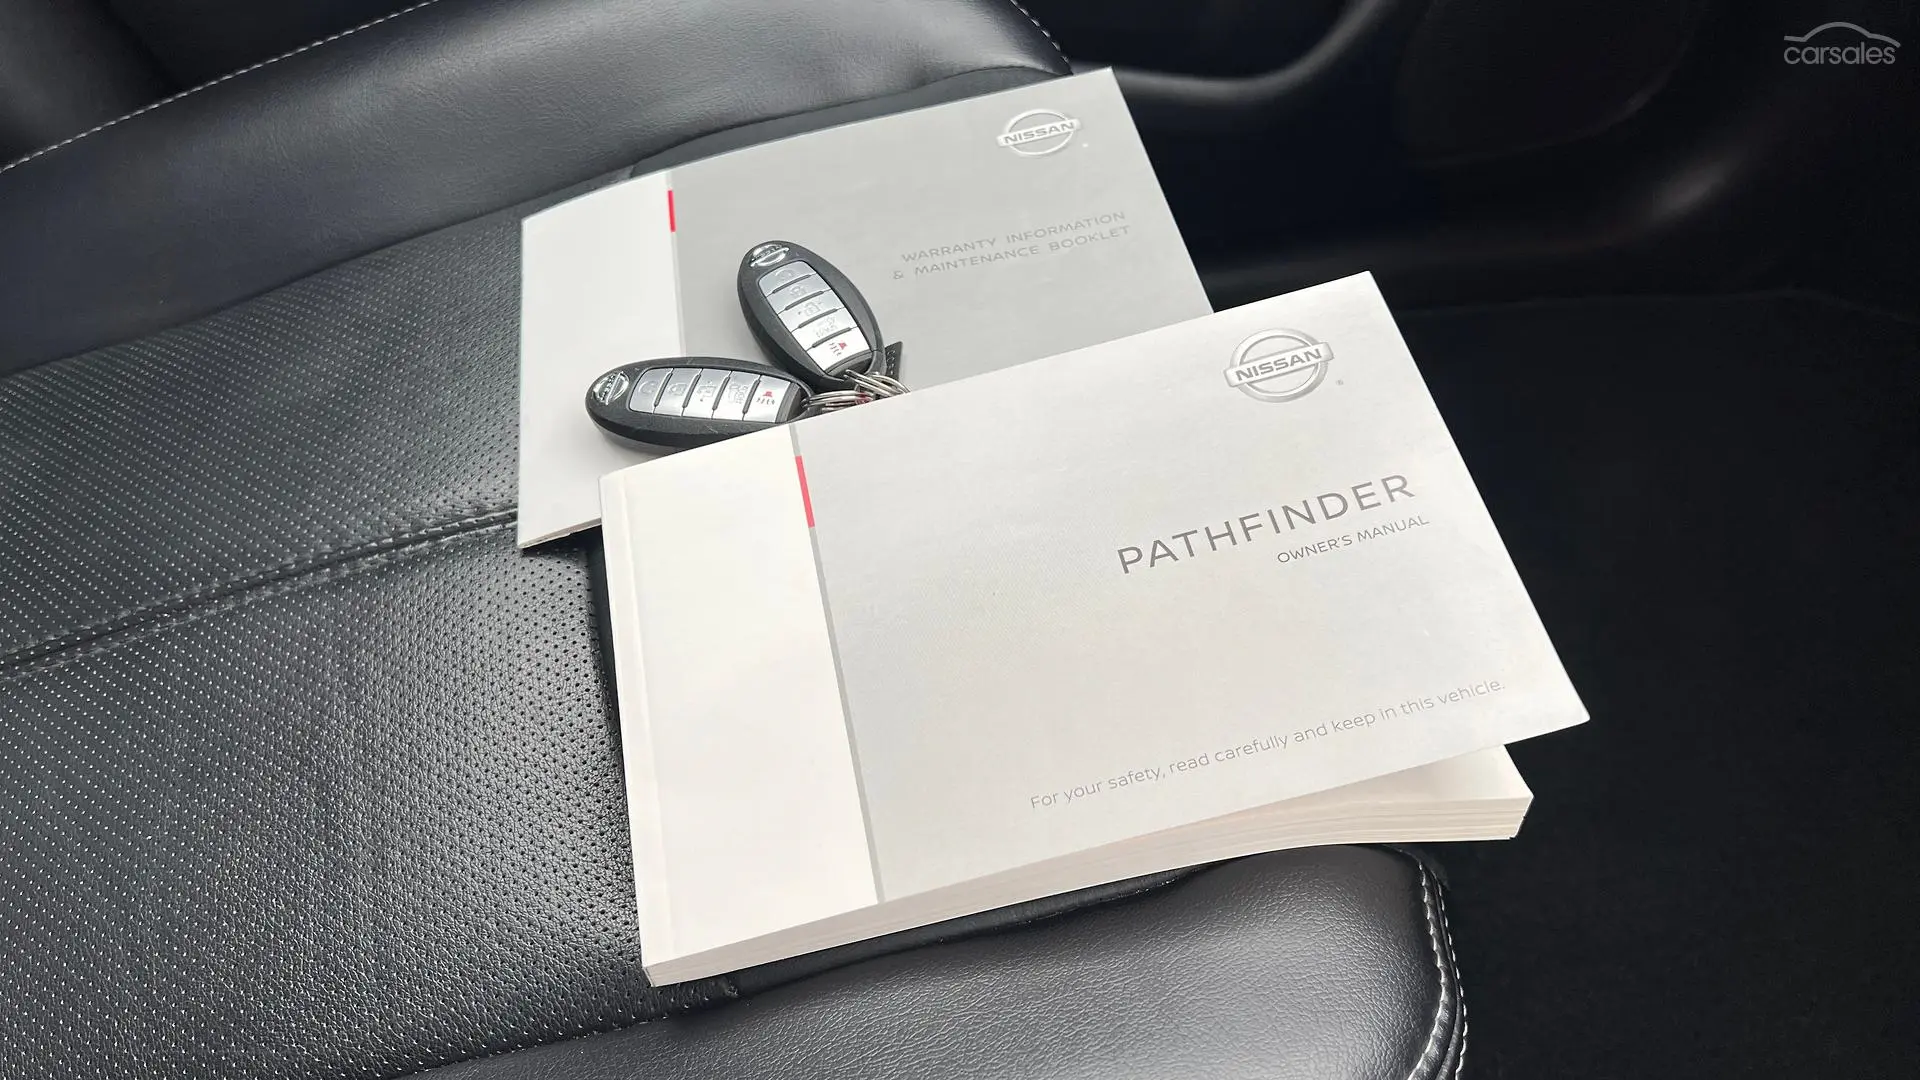 2019 Nissan Pathfinder Image 26